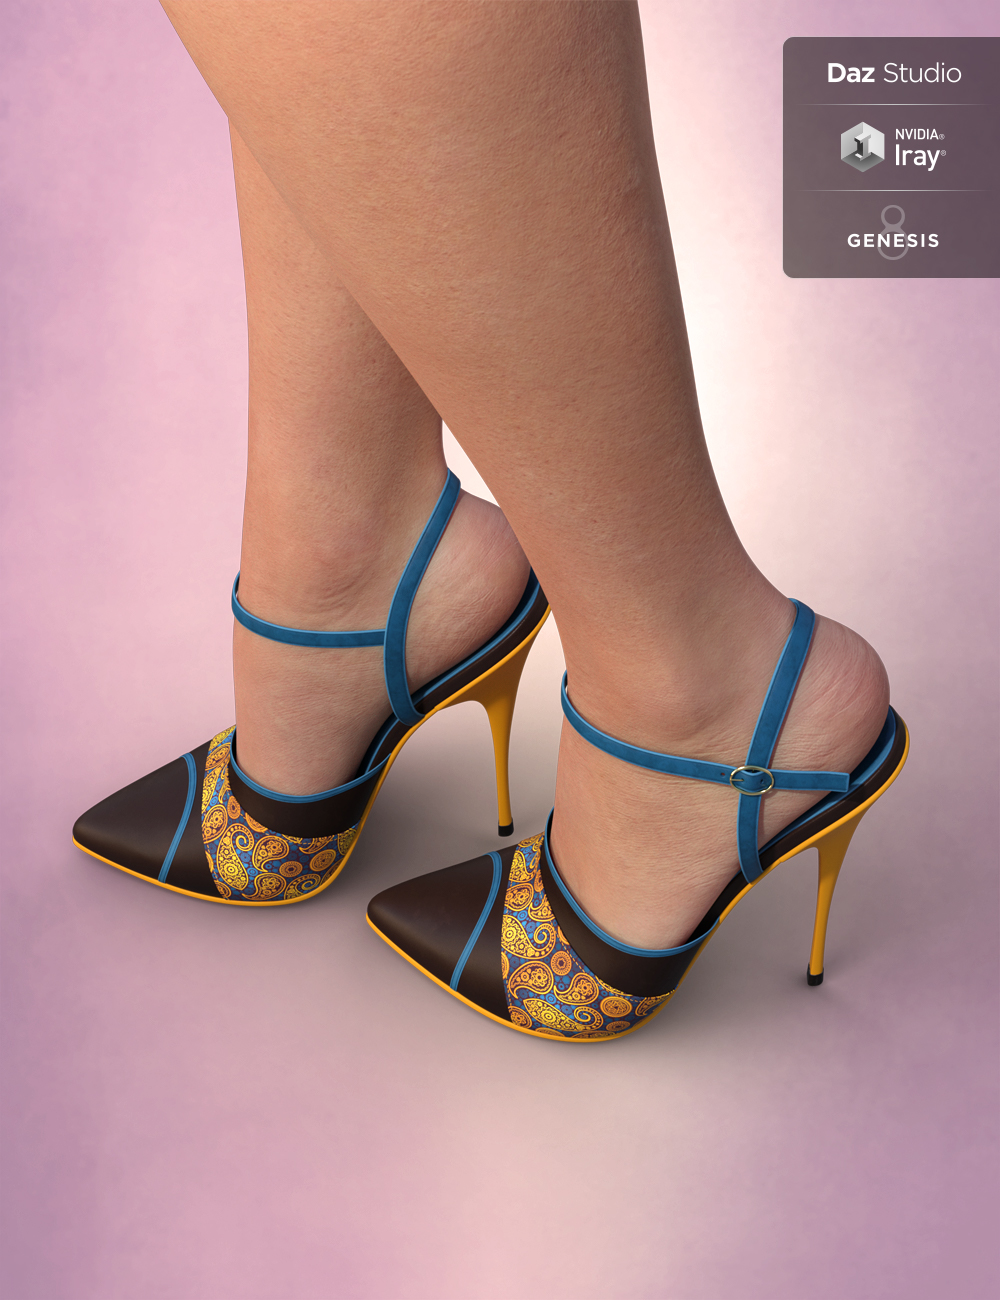 Stylett High Heels for Genesis 3 and 8 Female(s) | Daz 3D